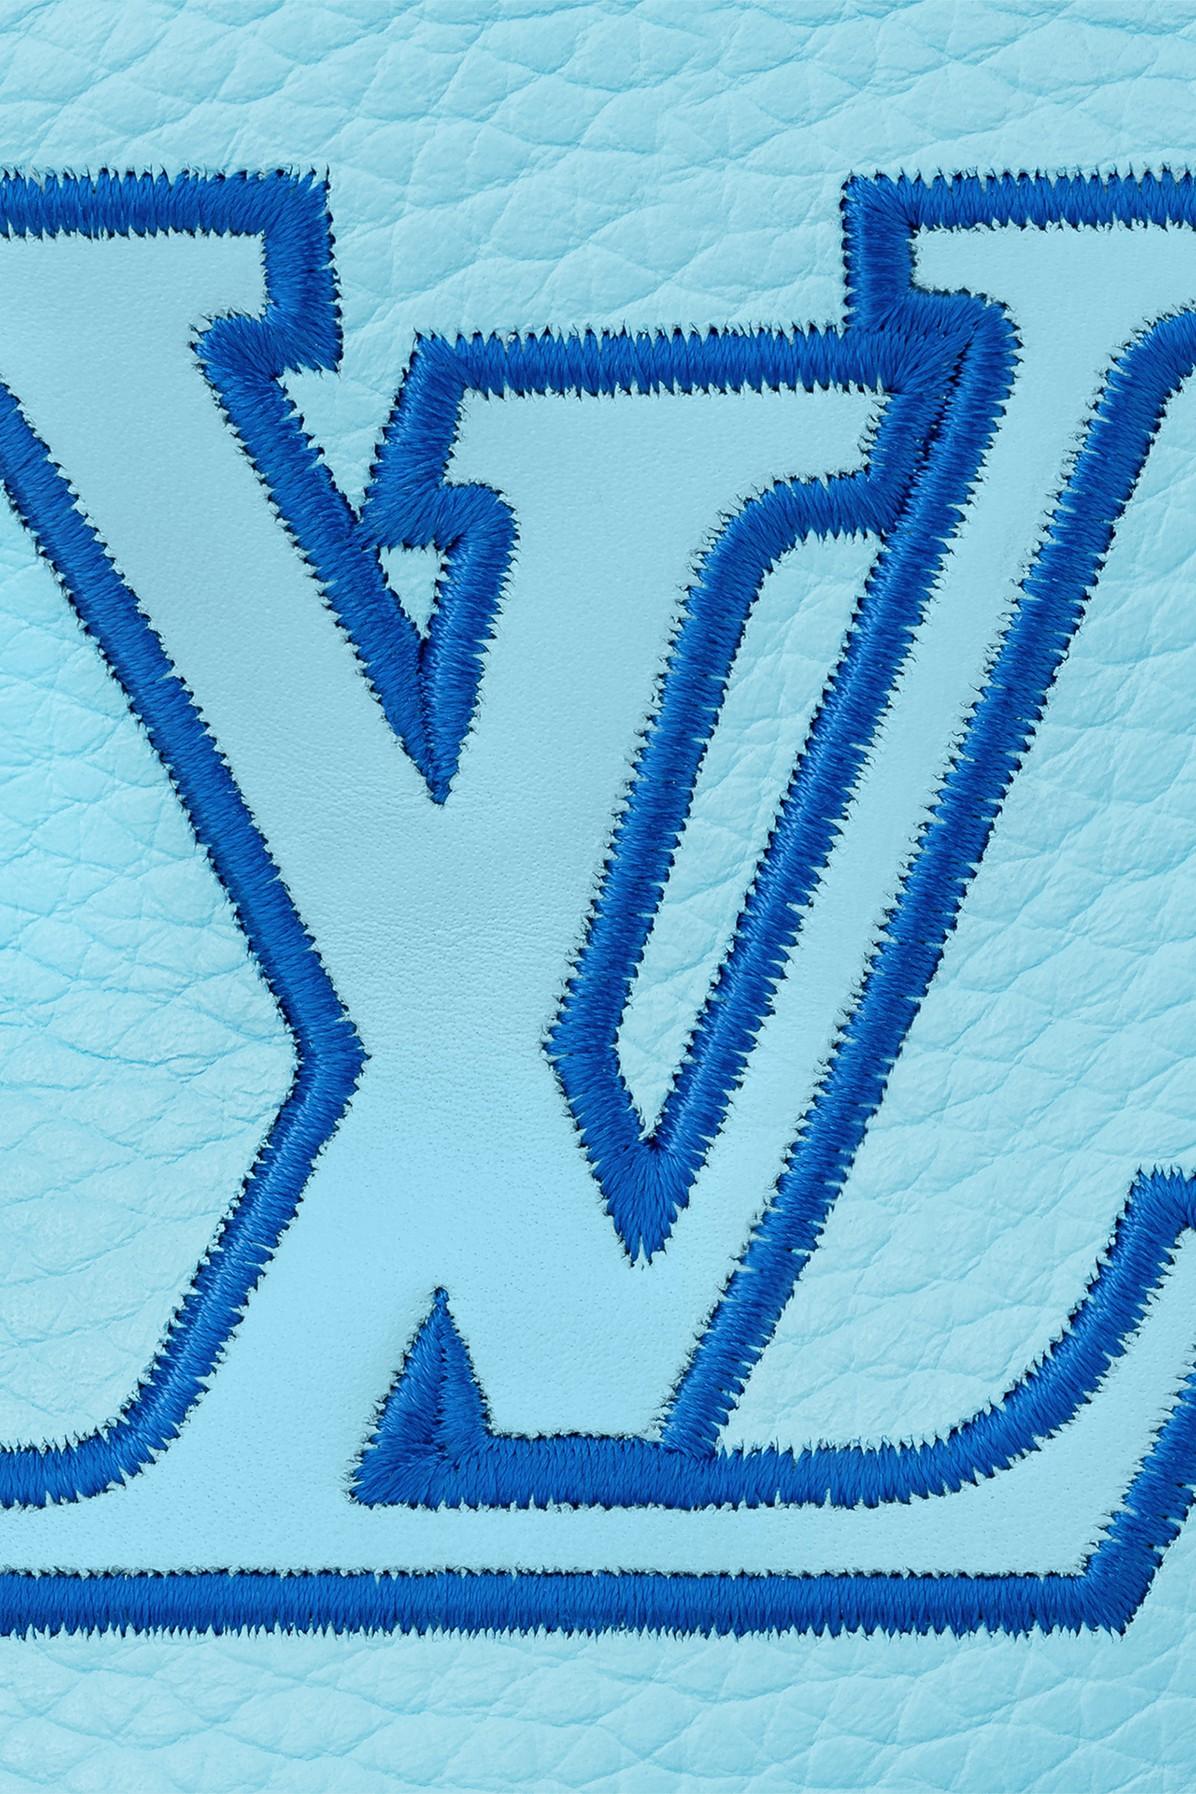 LOUIS VUITTON Navy Blue Leather Tattoo LV Logo Monogram High Top